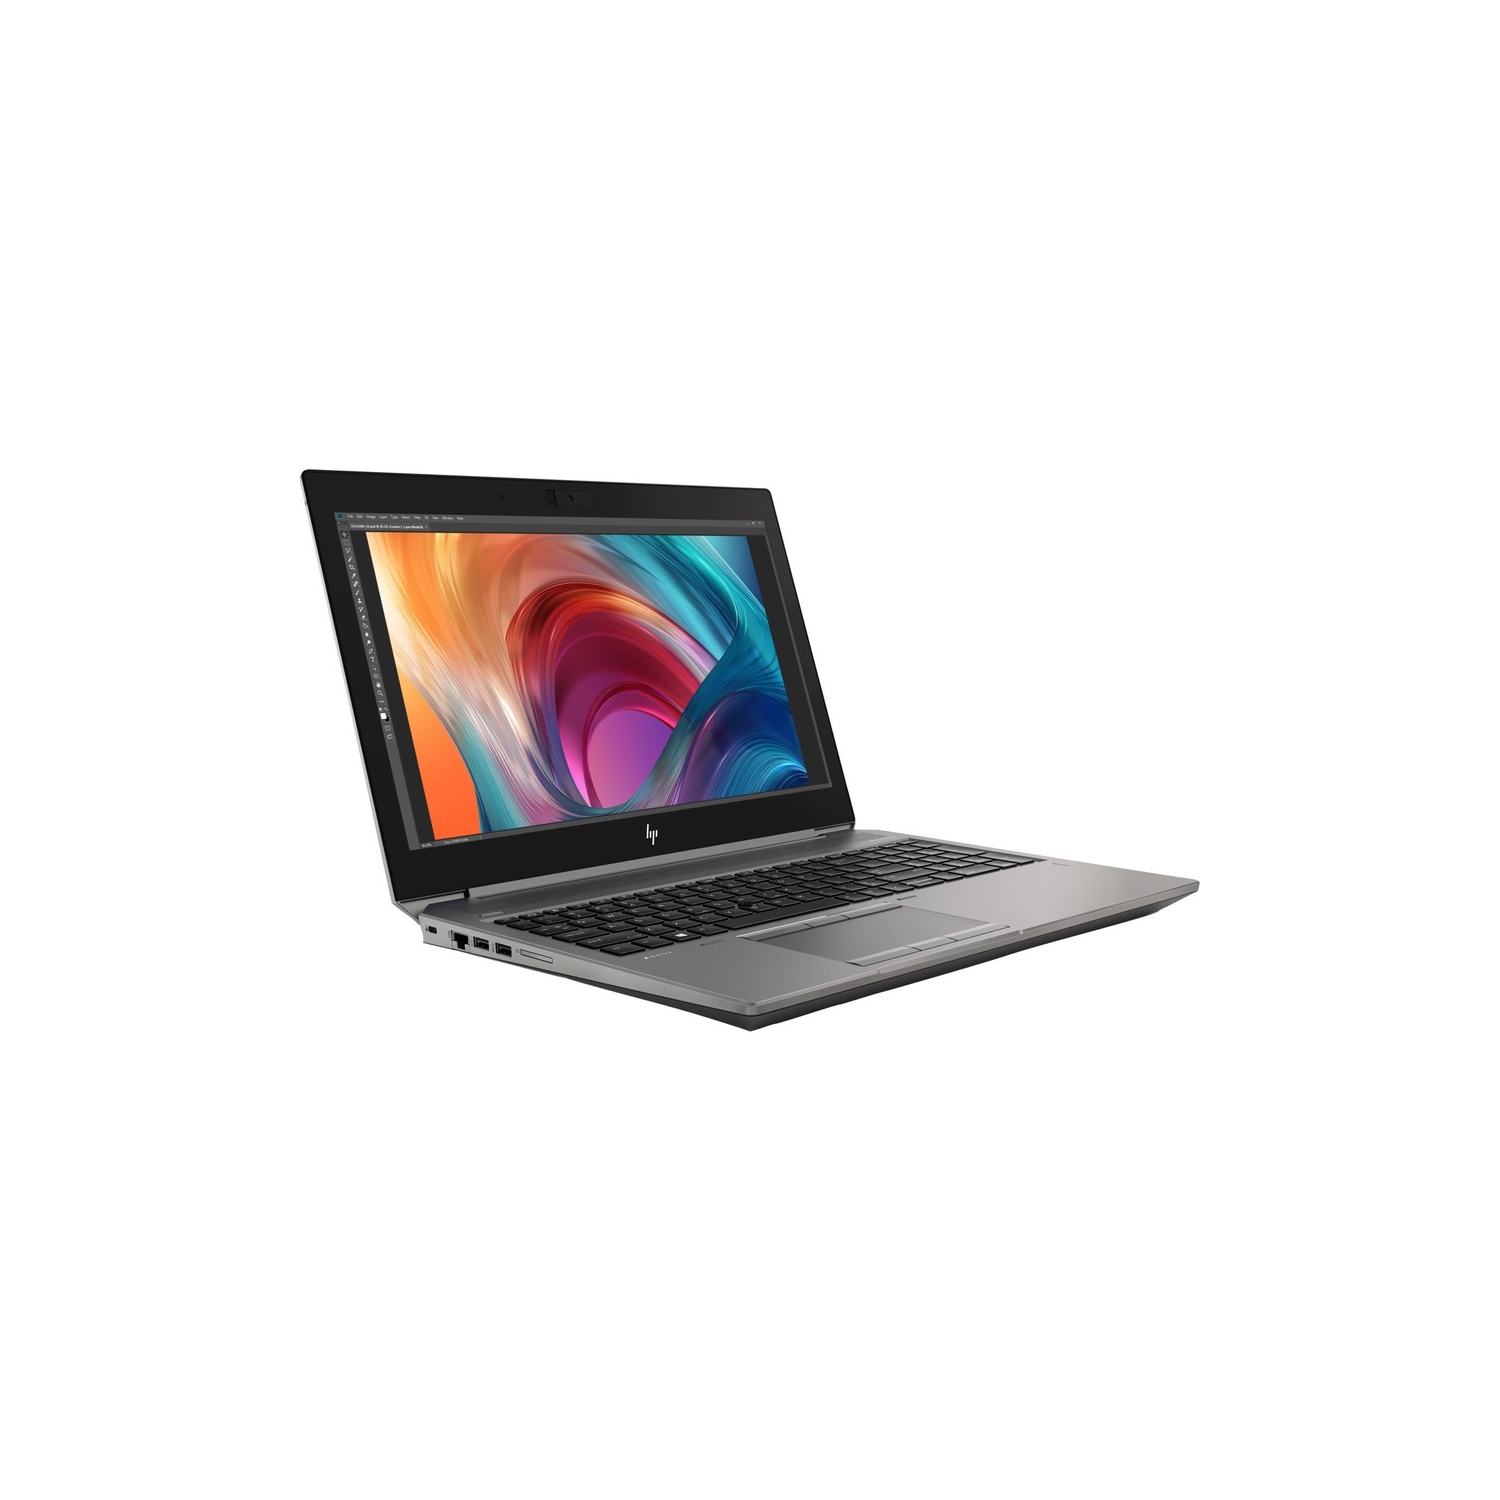 Refurbished (Good) - HP ZBook 15 G6 15.6" Mobile Workstation Intel i7-9750H 32 GB DDR4 512 GB NVMe Quadro T1000 Windows 10 Pro 64-Bit